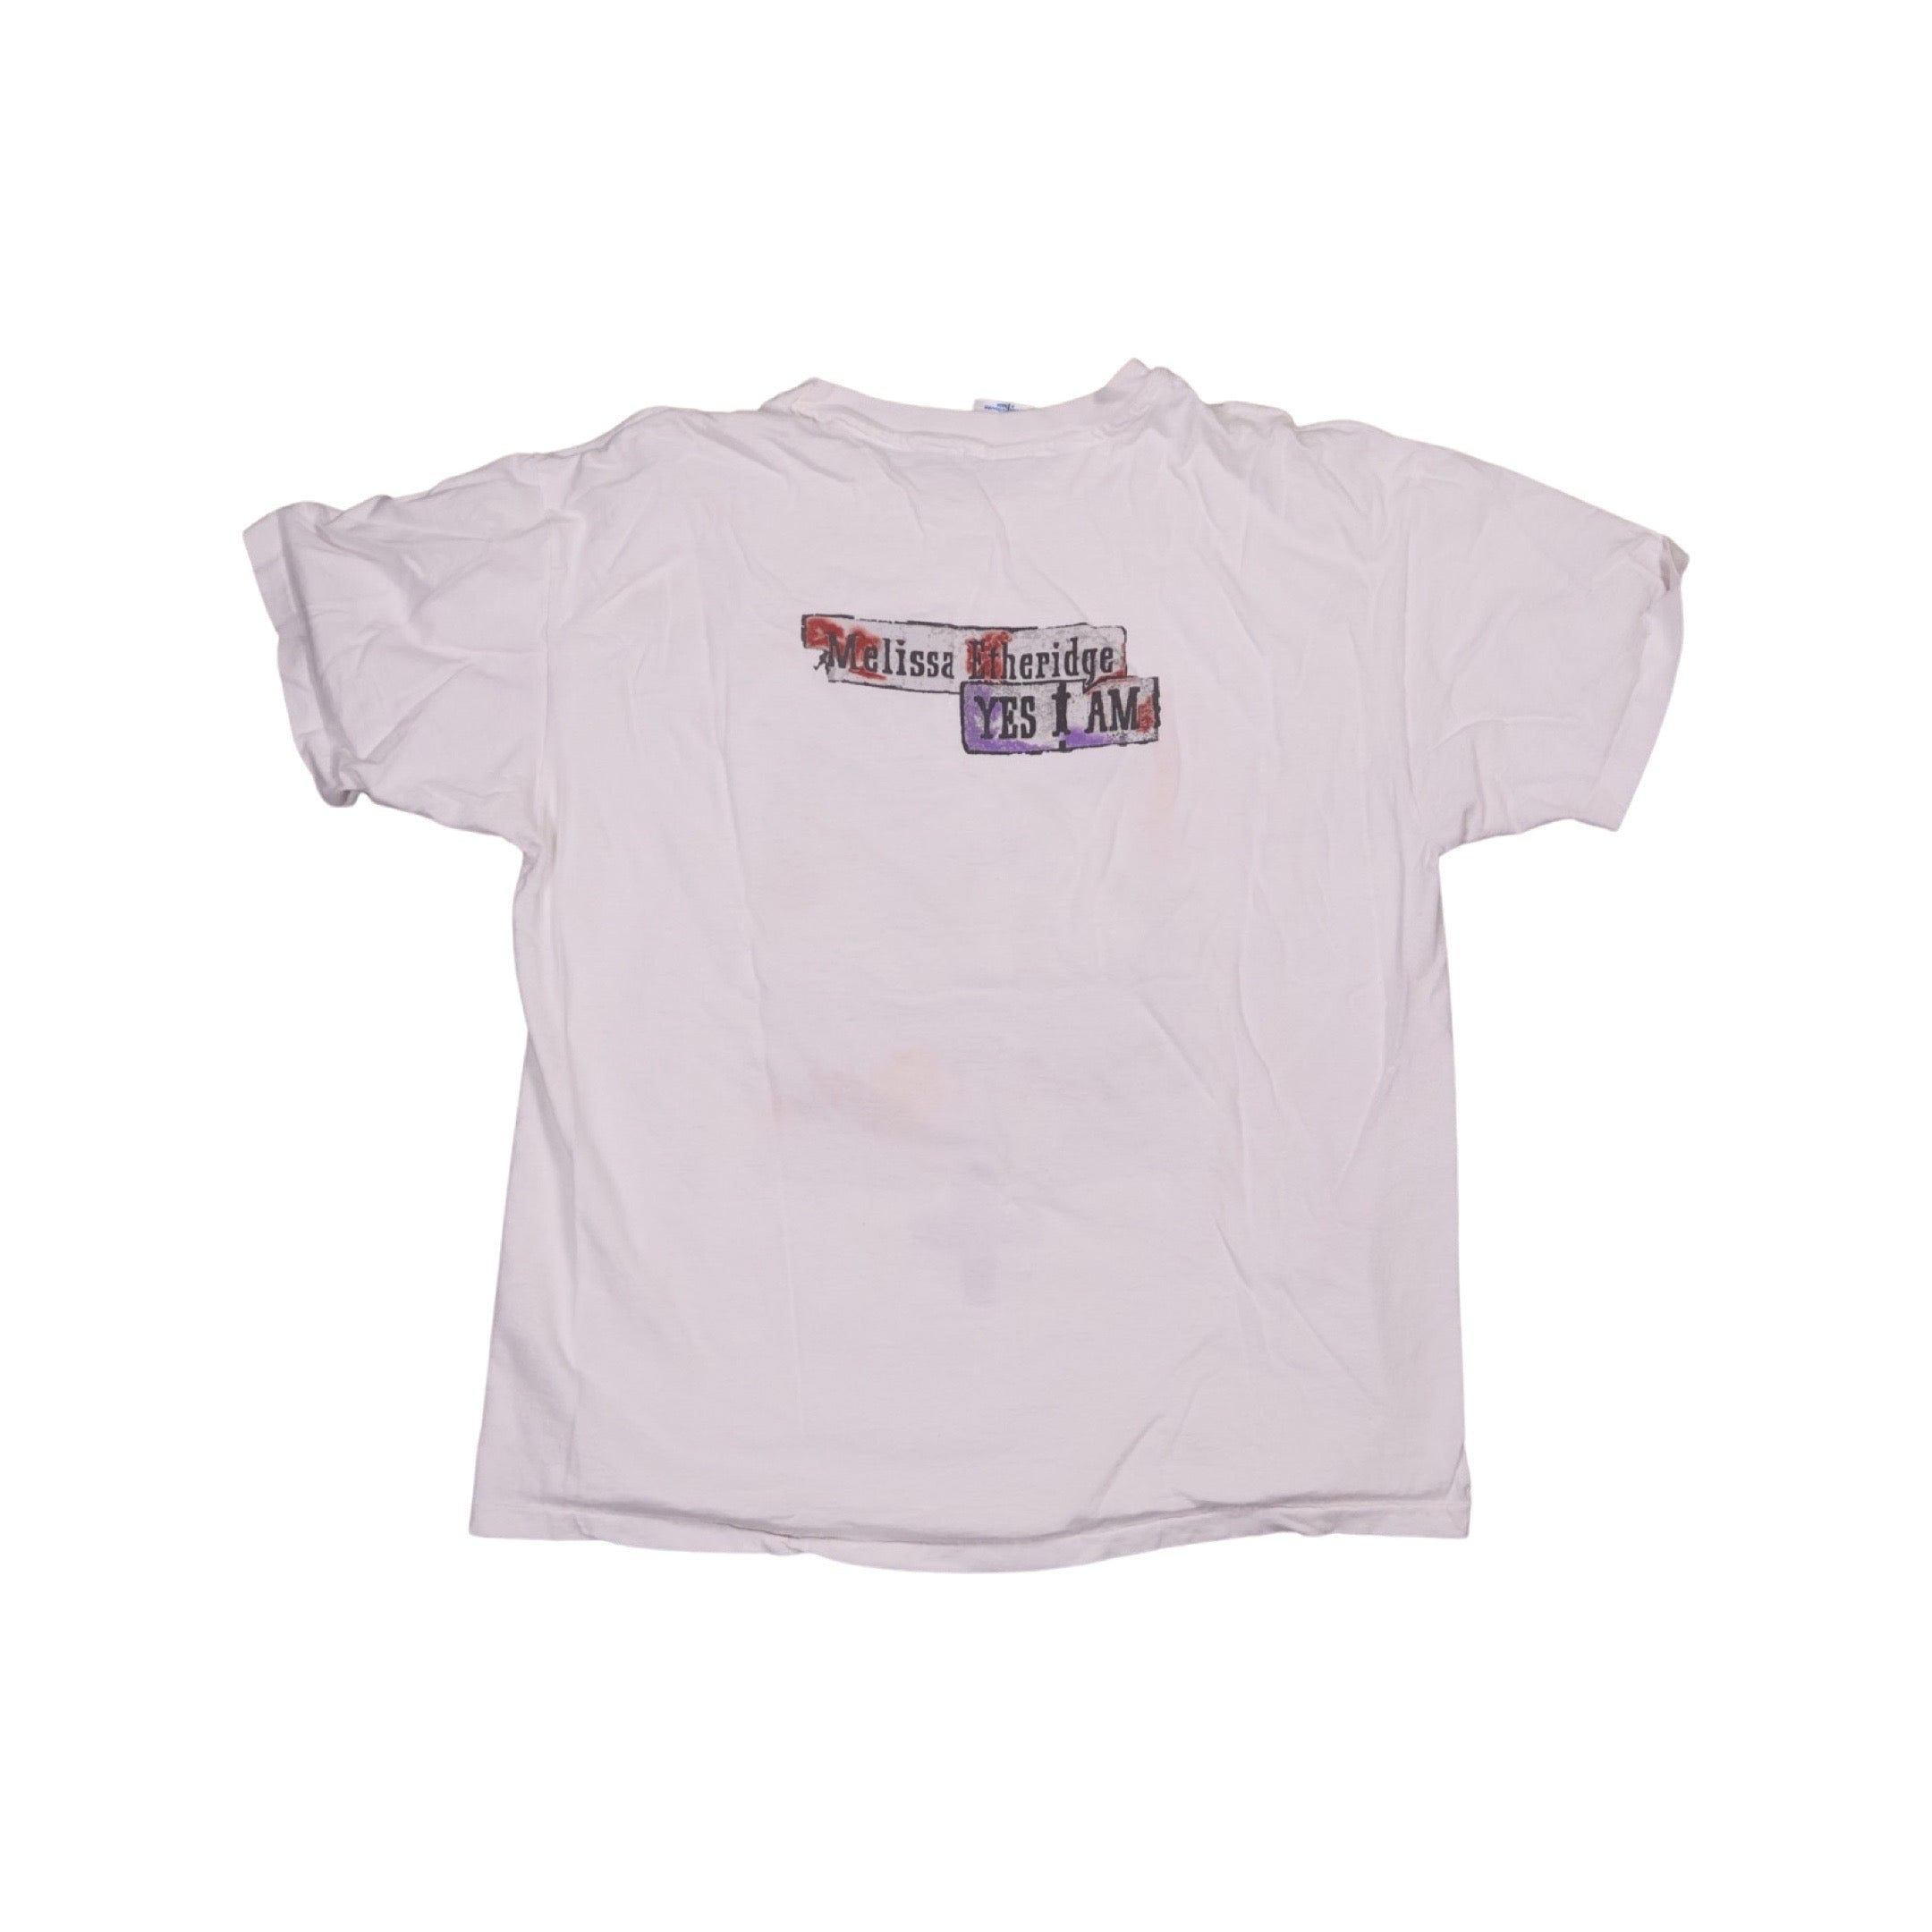 Melissa Ethridge 1993 Tour T-Shirt (XL)